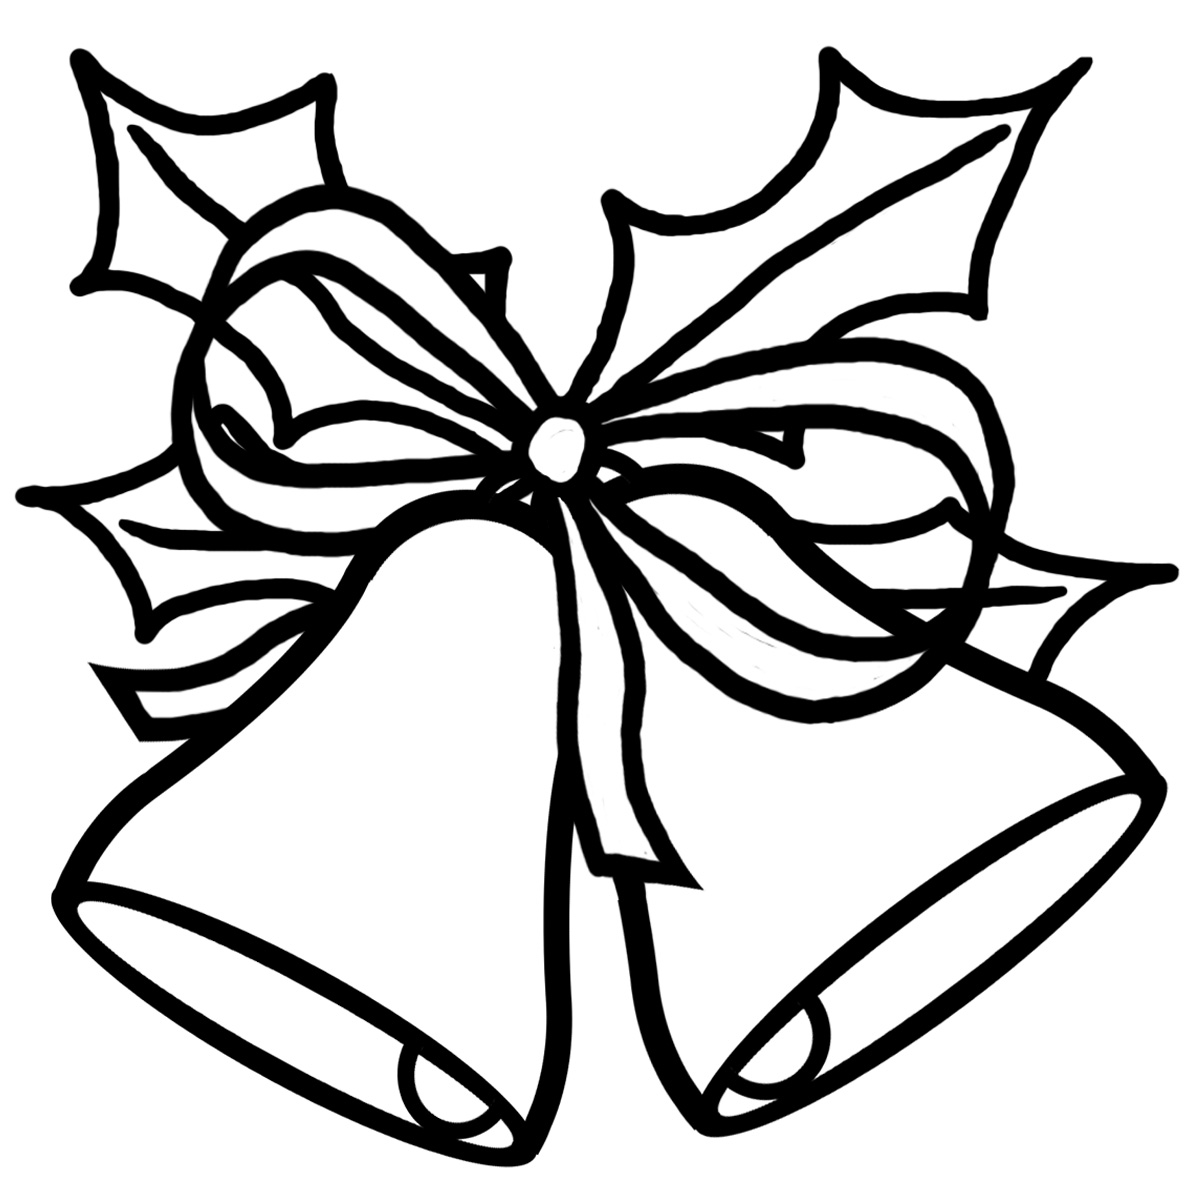 Santa claus letter clipart black and white - ClipartFox